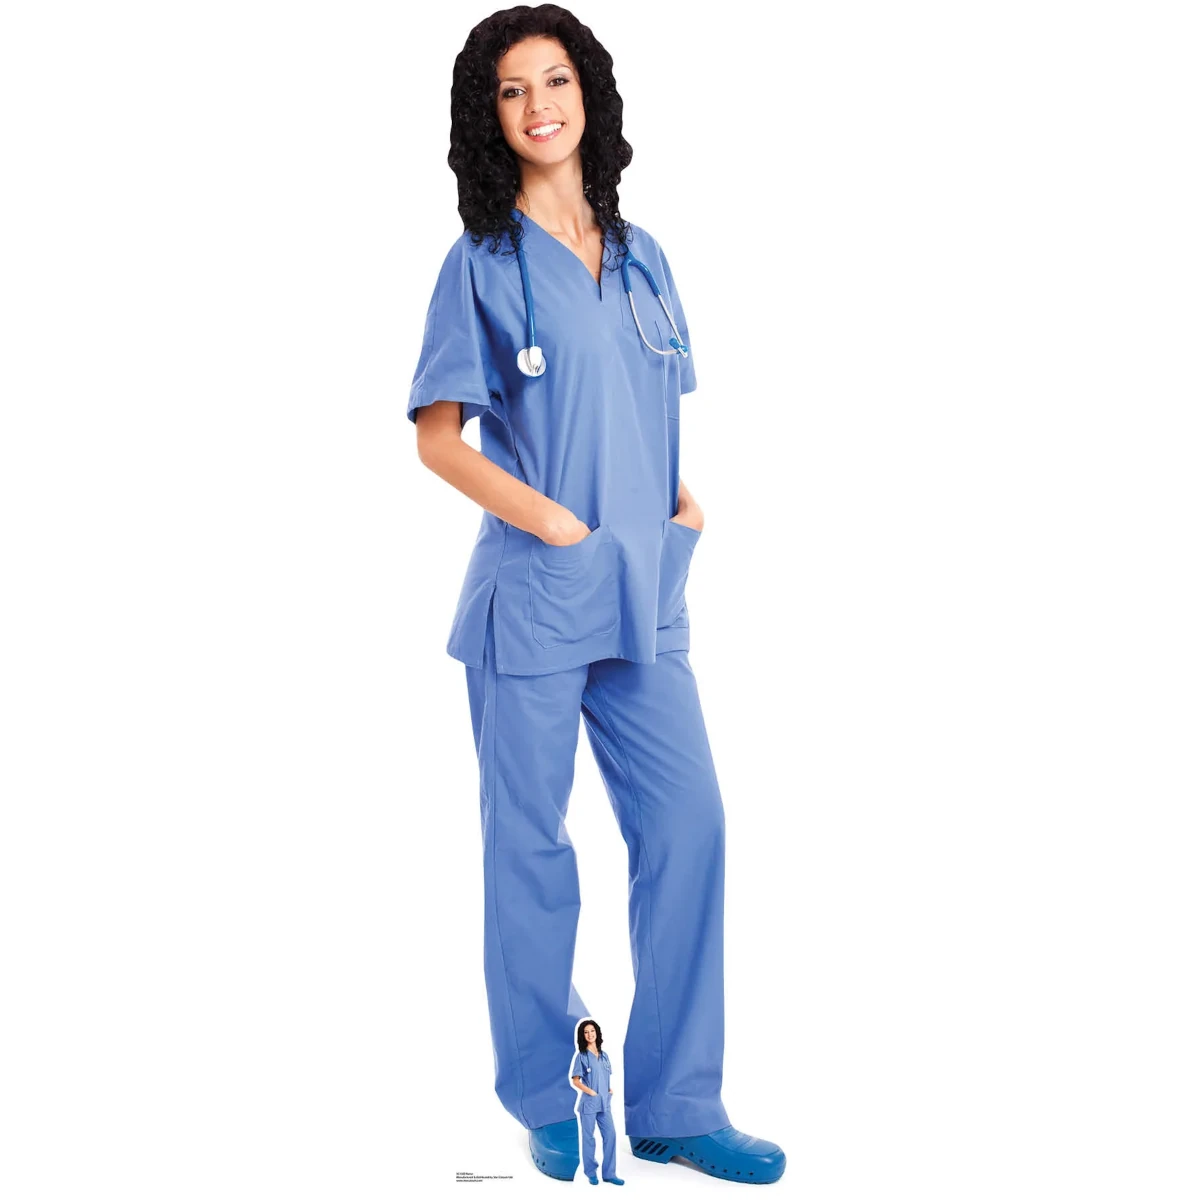 SC1583 Female DoctorNurse Health Worker Lifesize + Mini Cardboard Cutout Standee Front